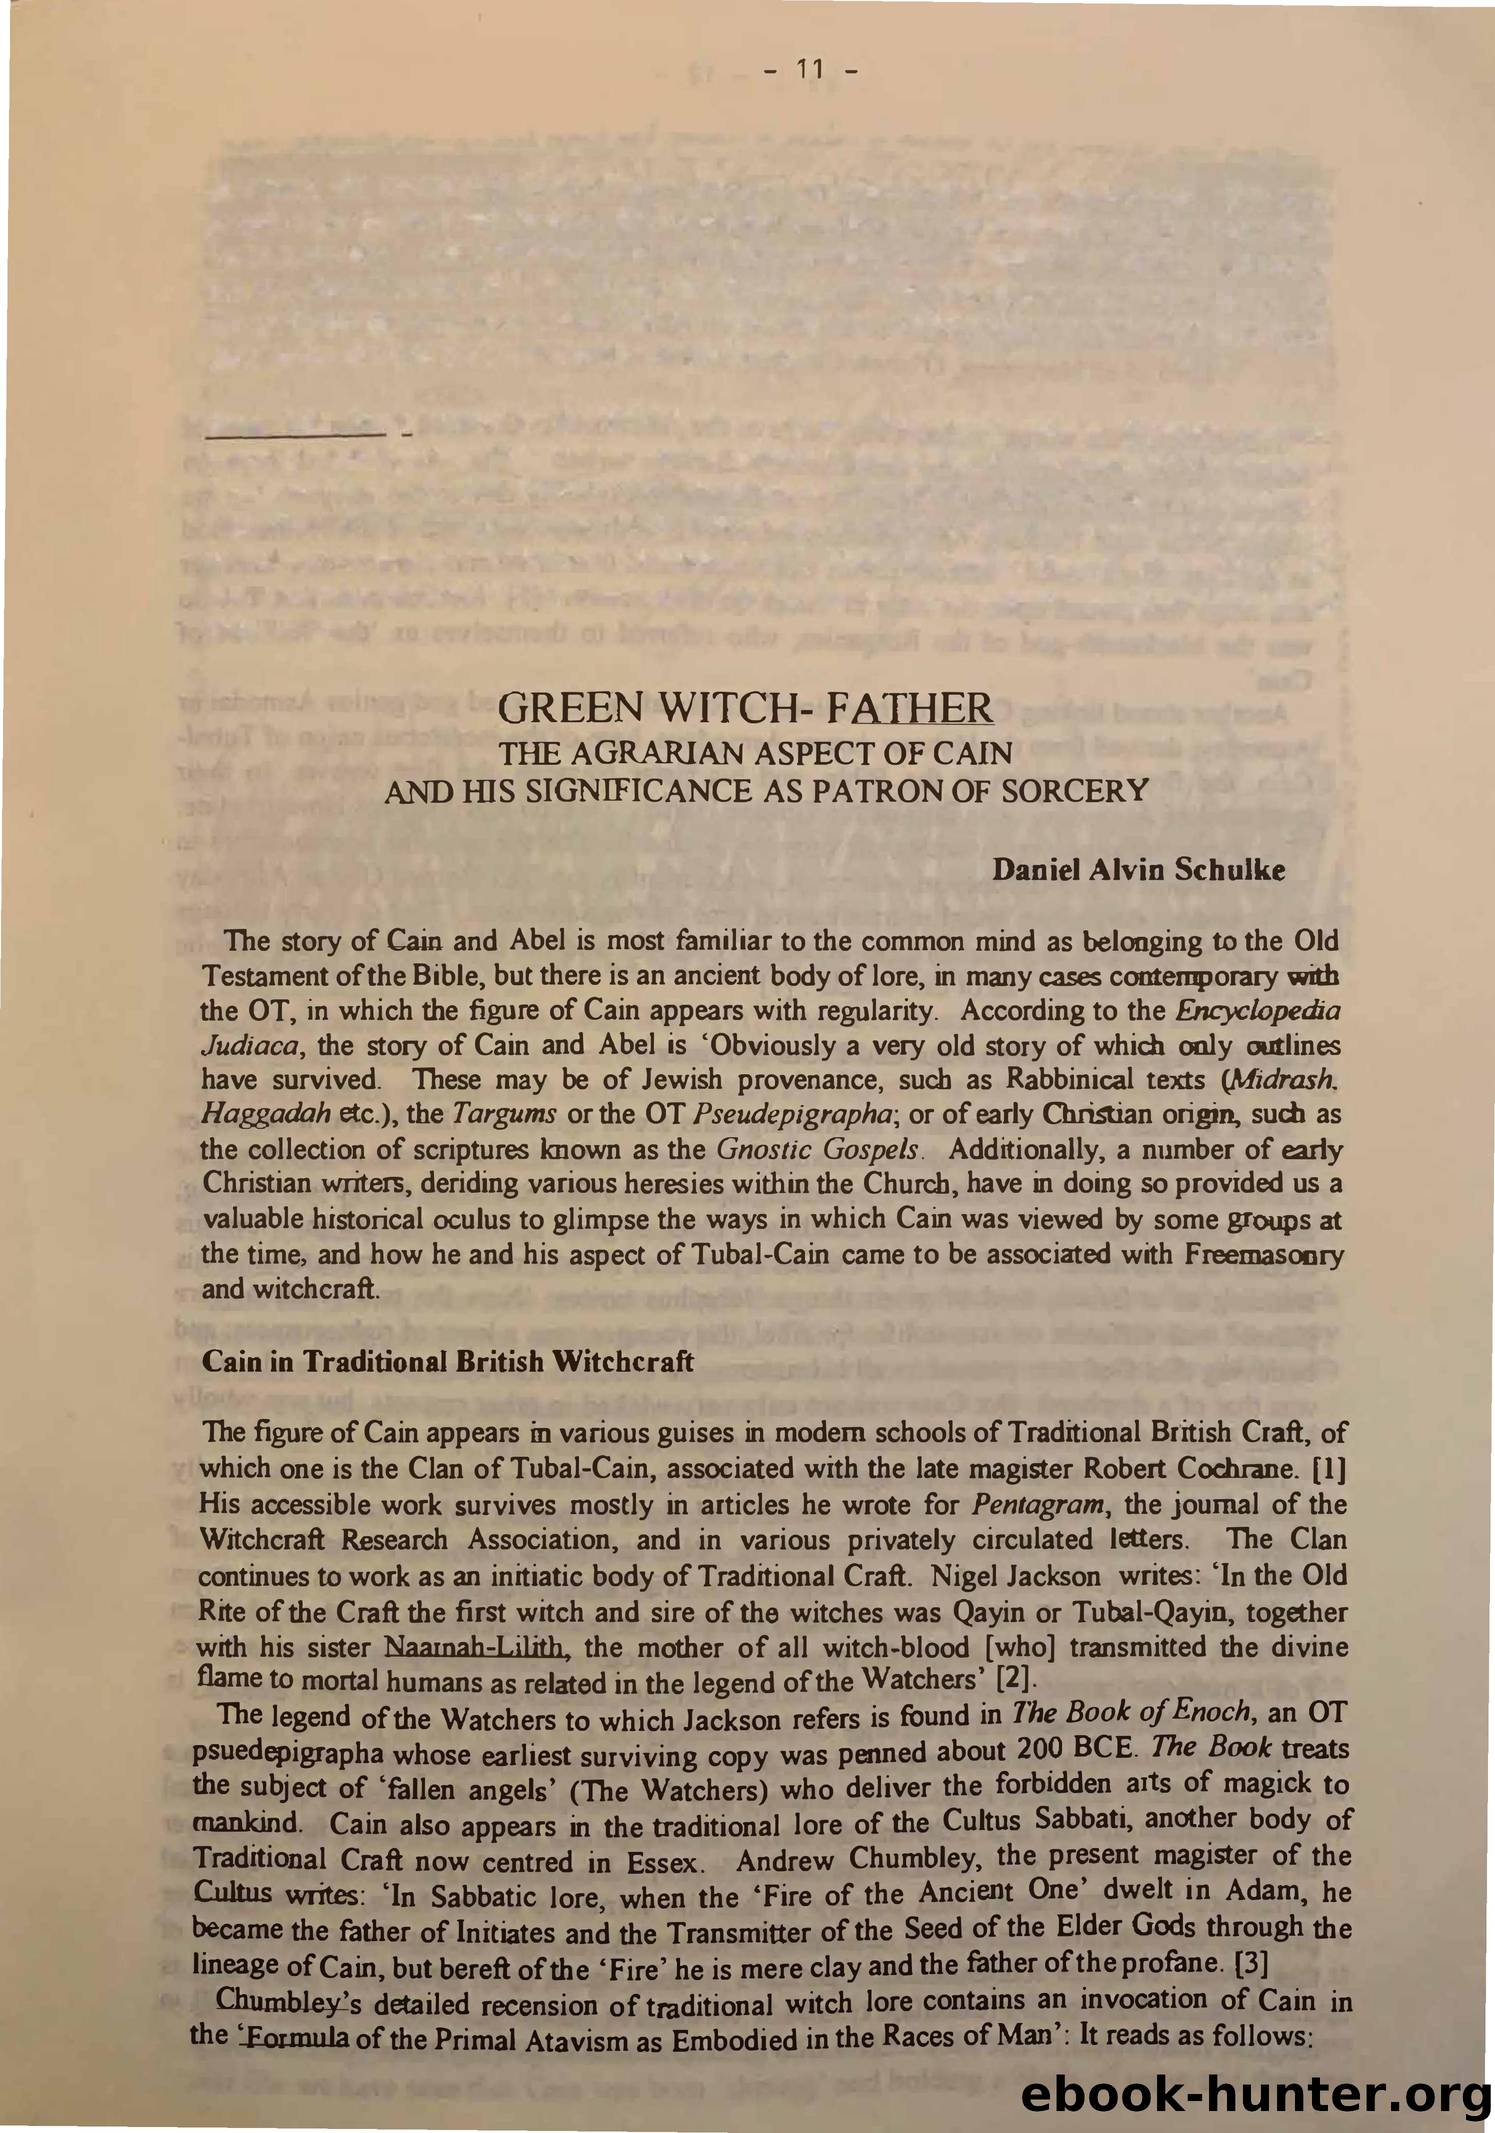 Green Witch-Father by Daniel Schulke